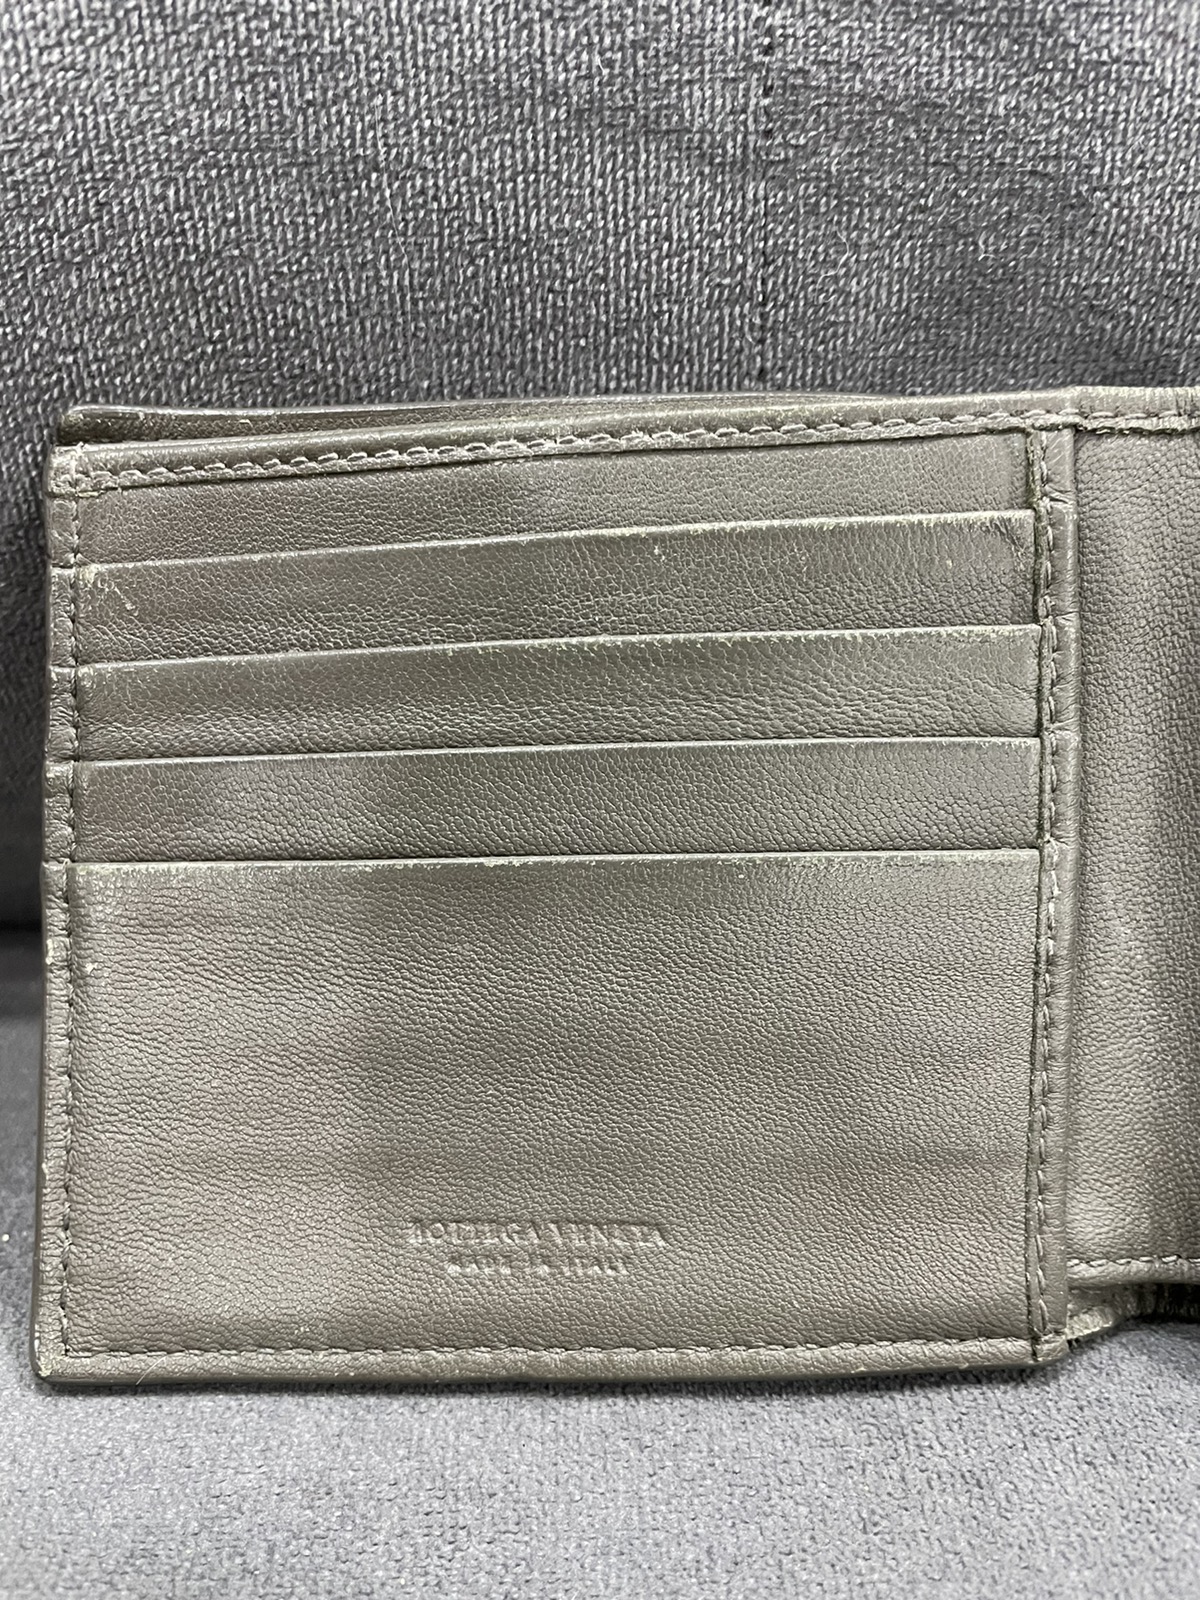 Authentic BOTTEGA VENETA MEN’S Green Leather Wallet - 4